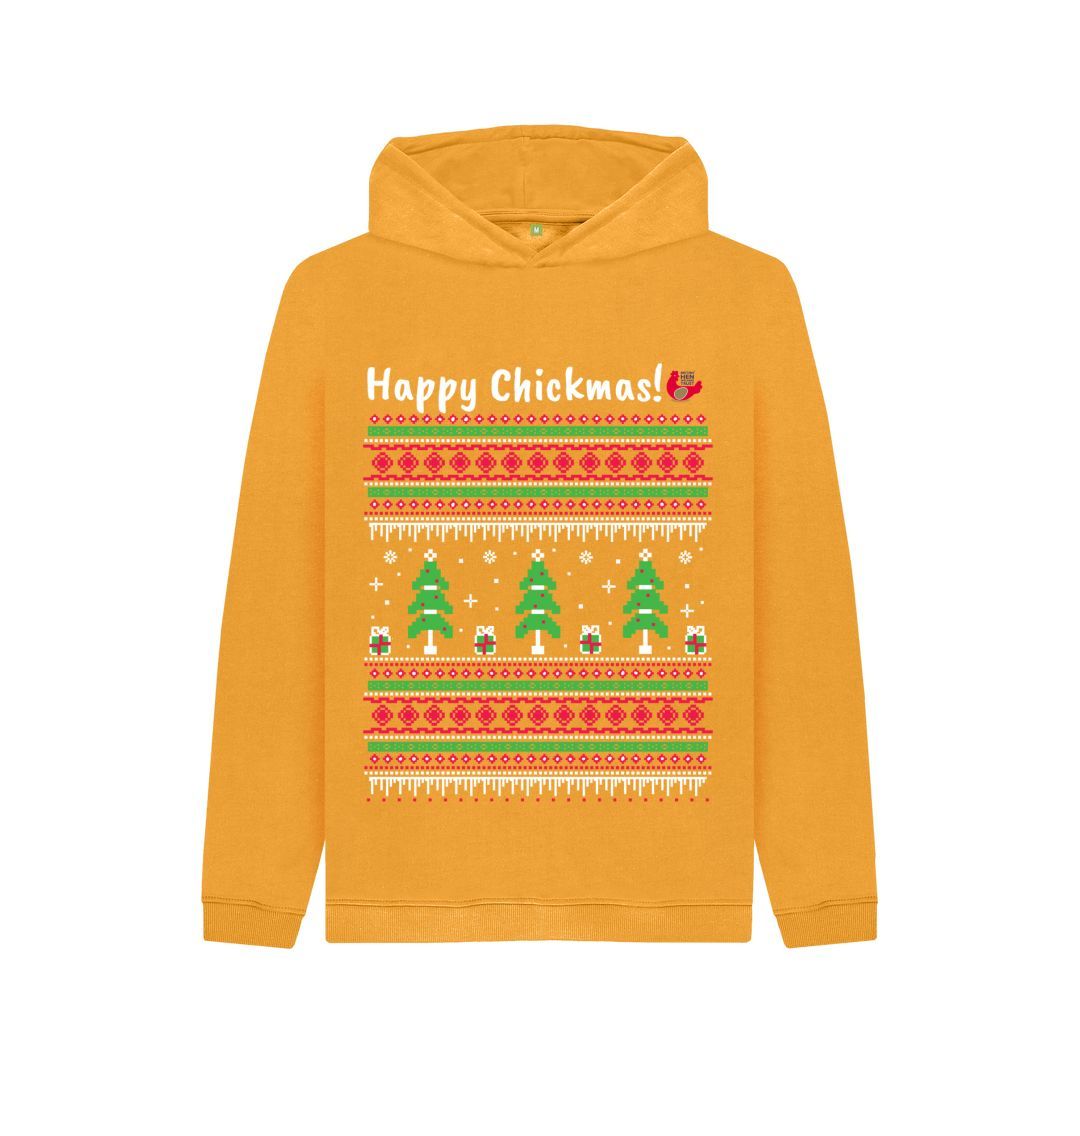 Mustard Kids Unisex Hoodie - Happy Chickmas!